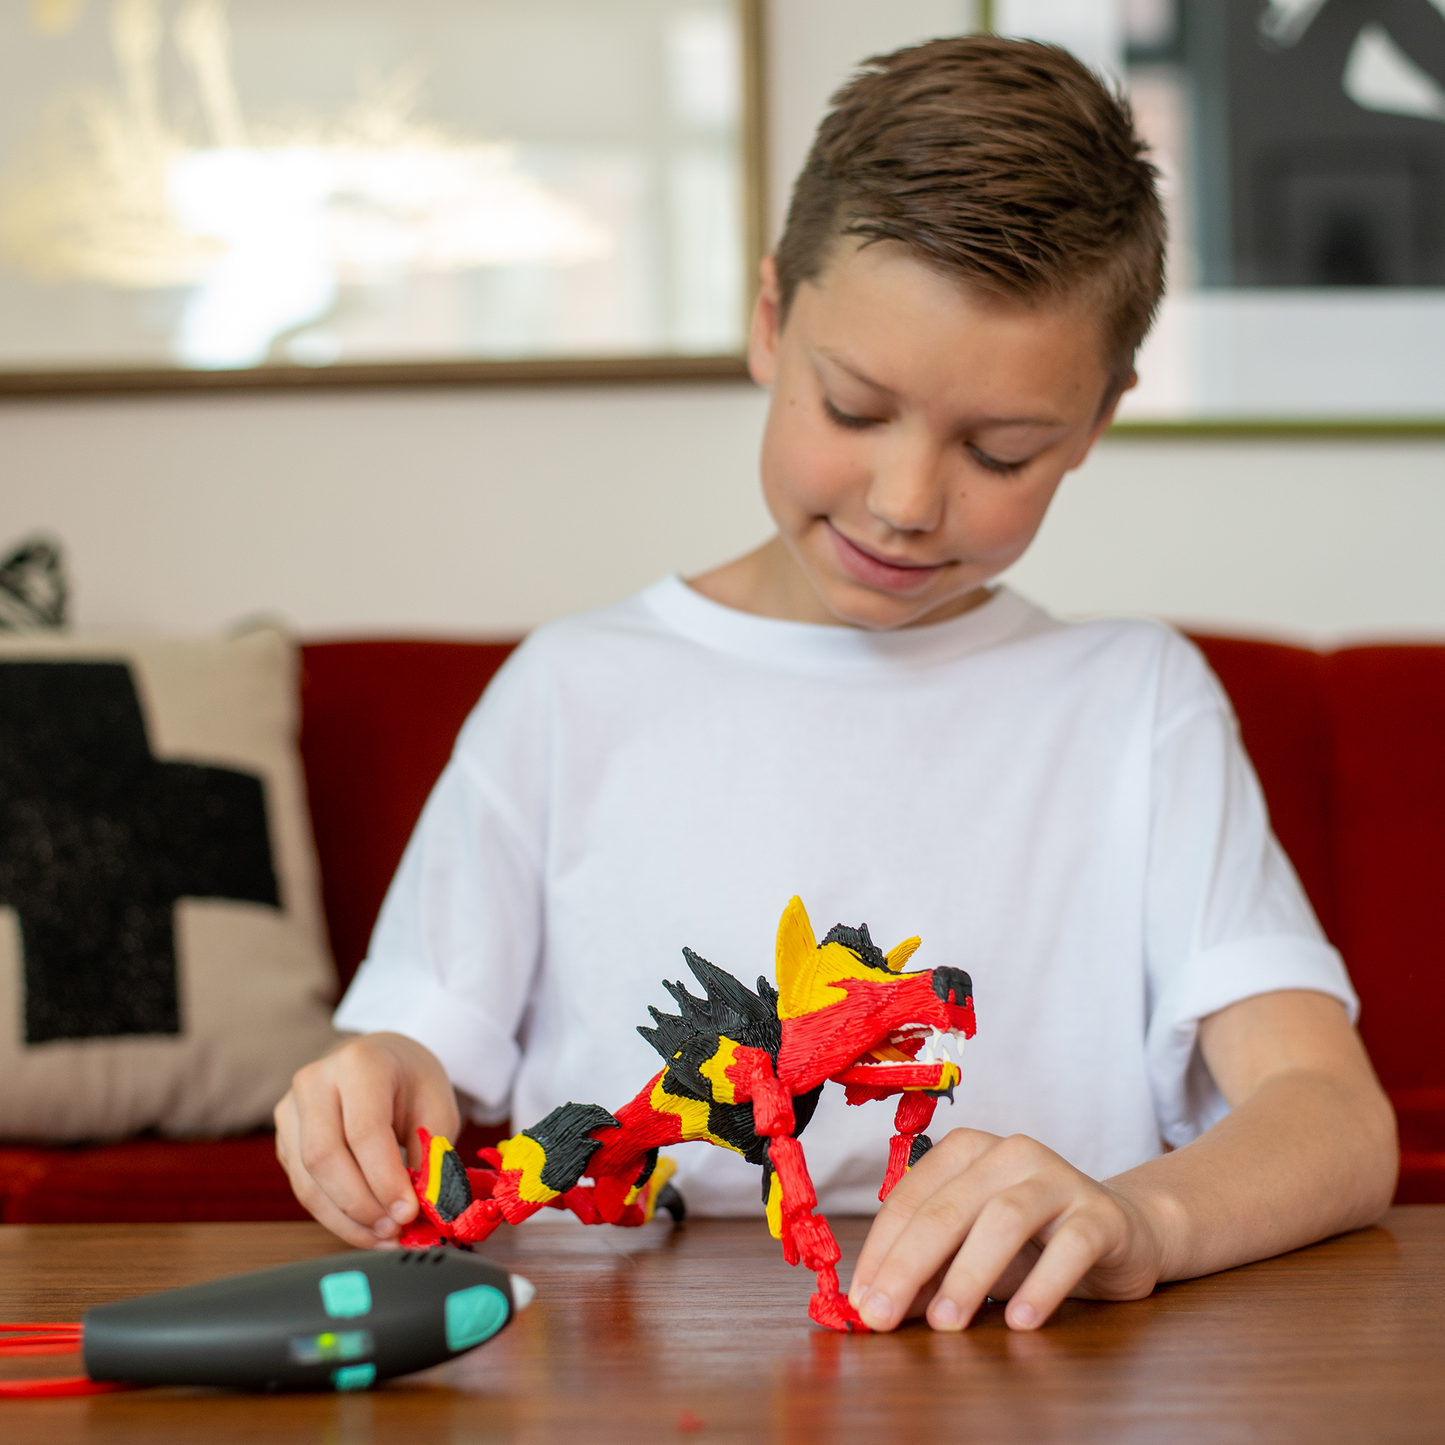 PiKA3D Junior 3D Printing Pen for Kids Ages 6+